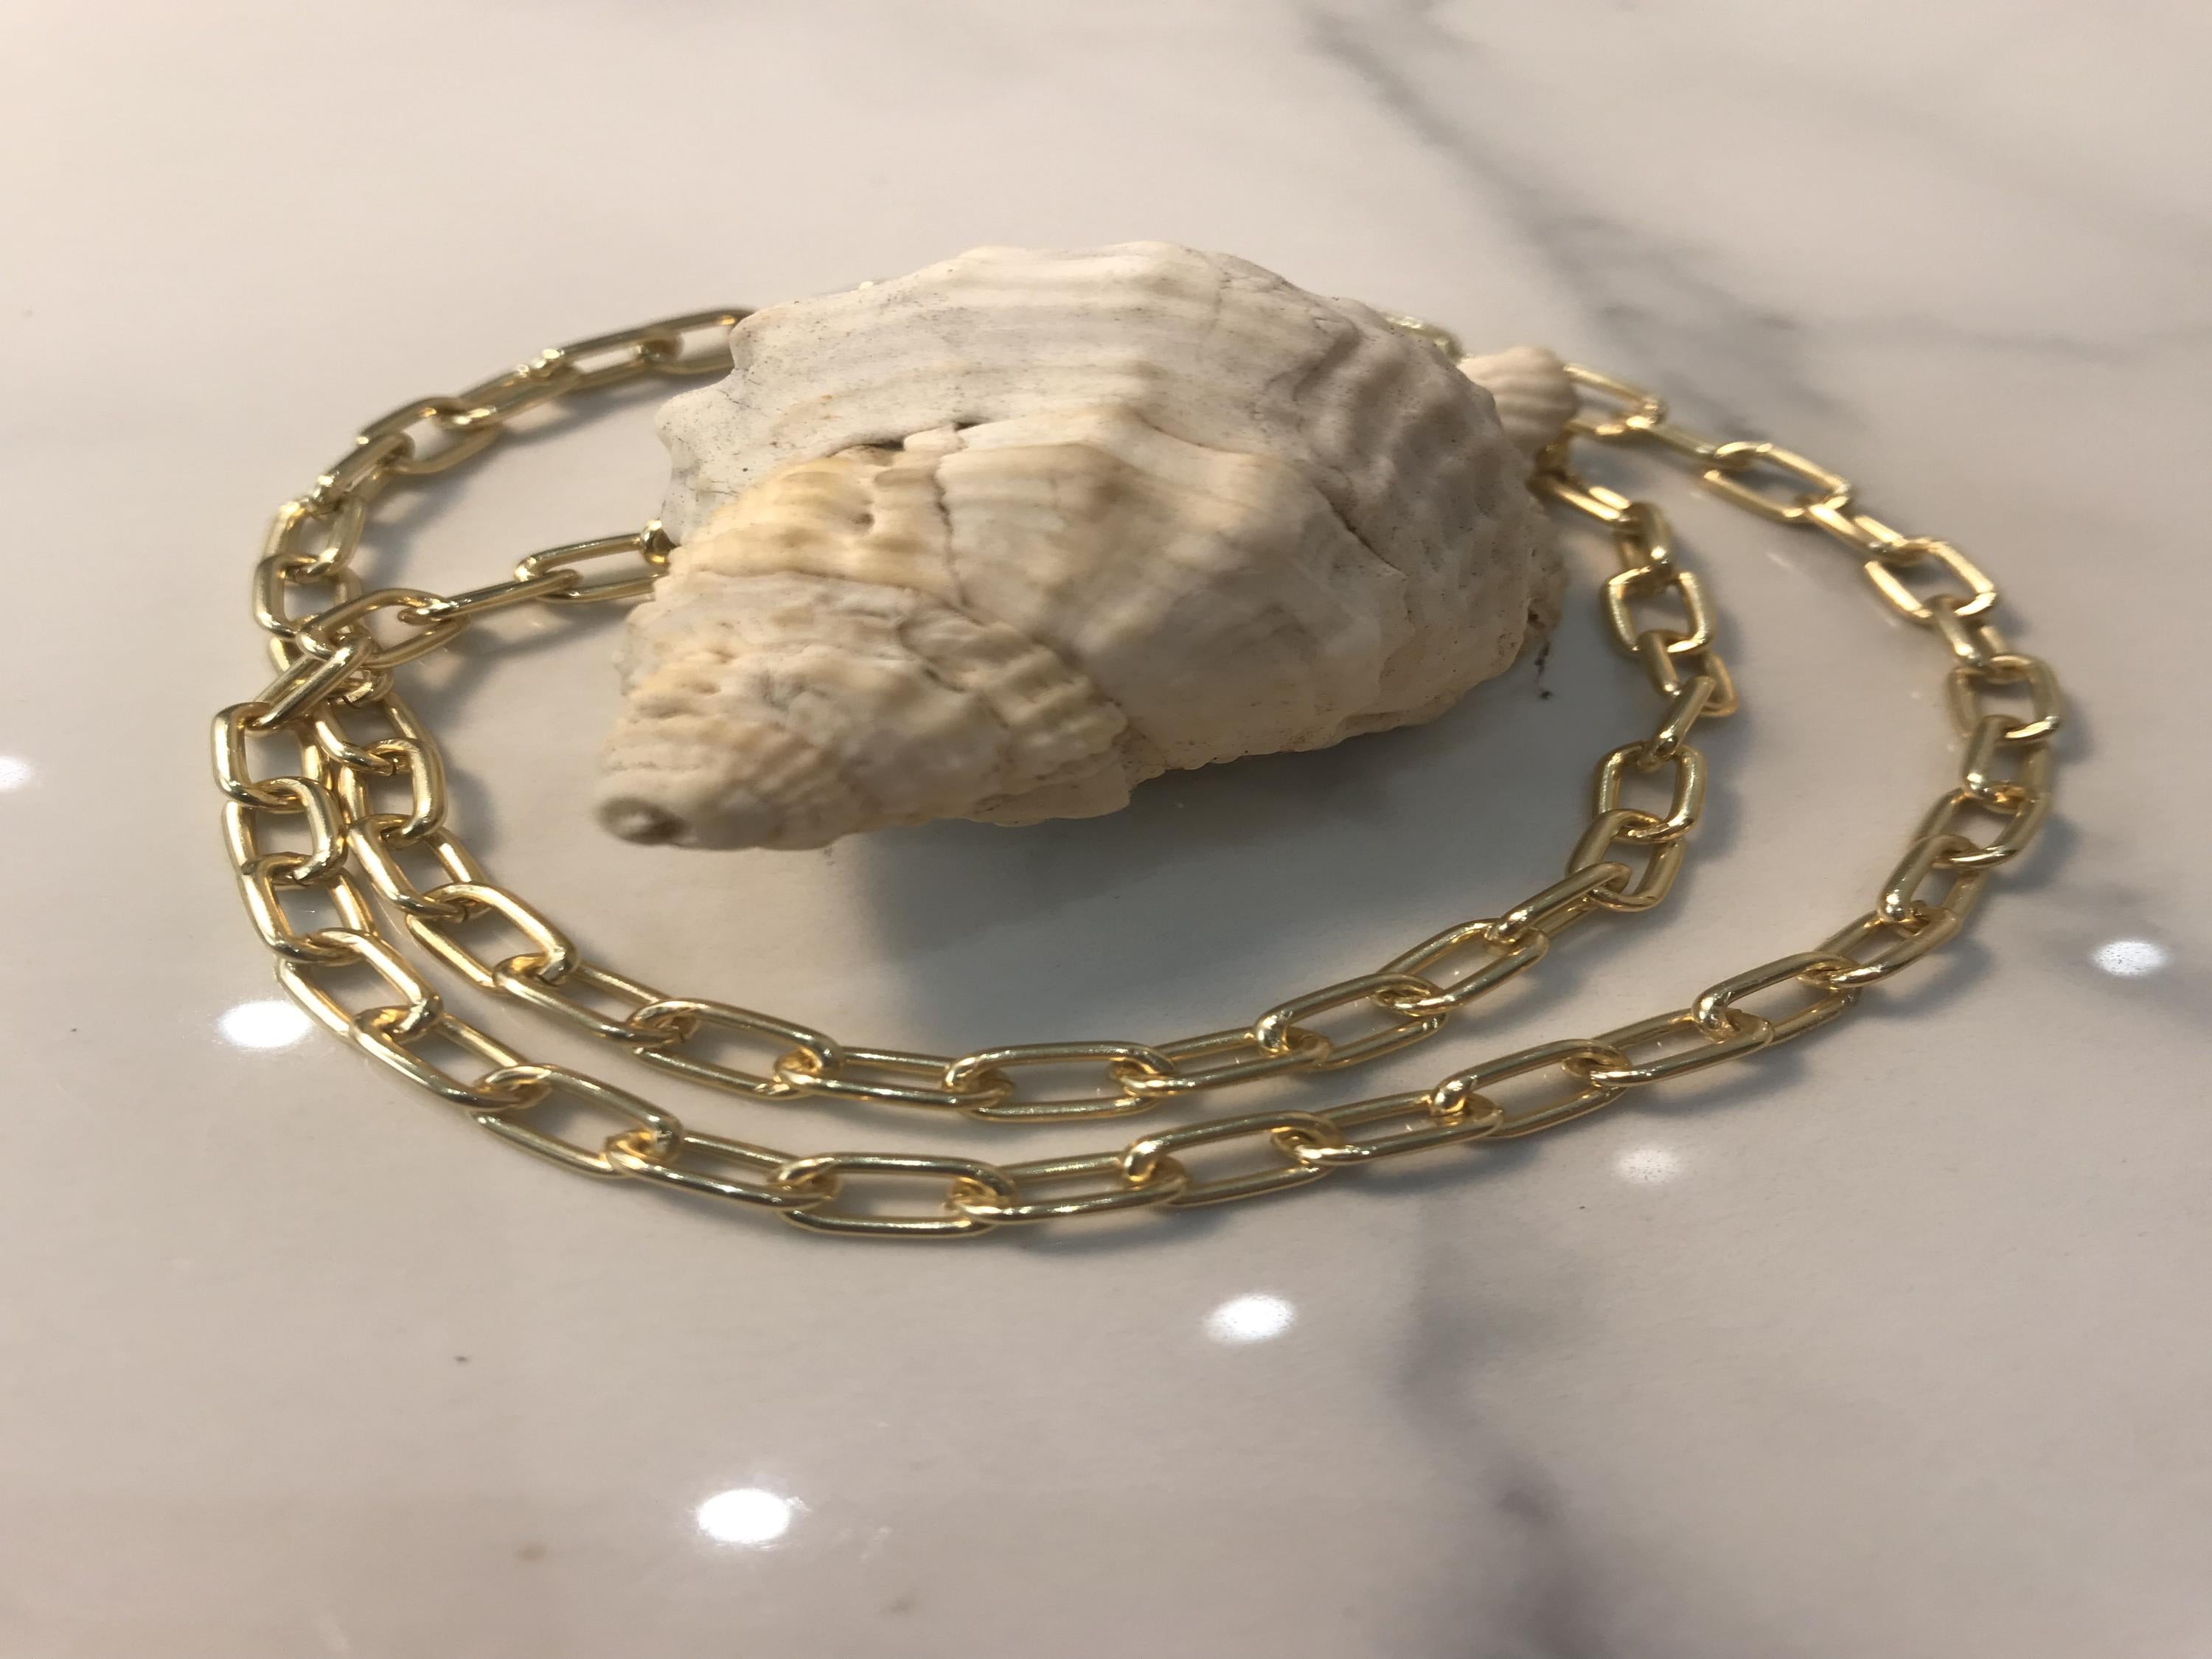 PENISCOLA neckline chain